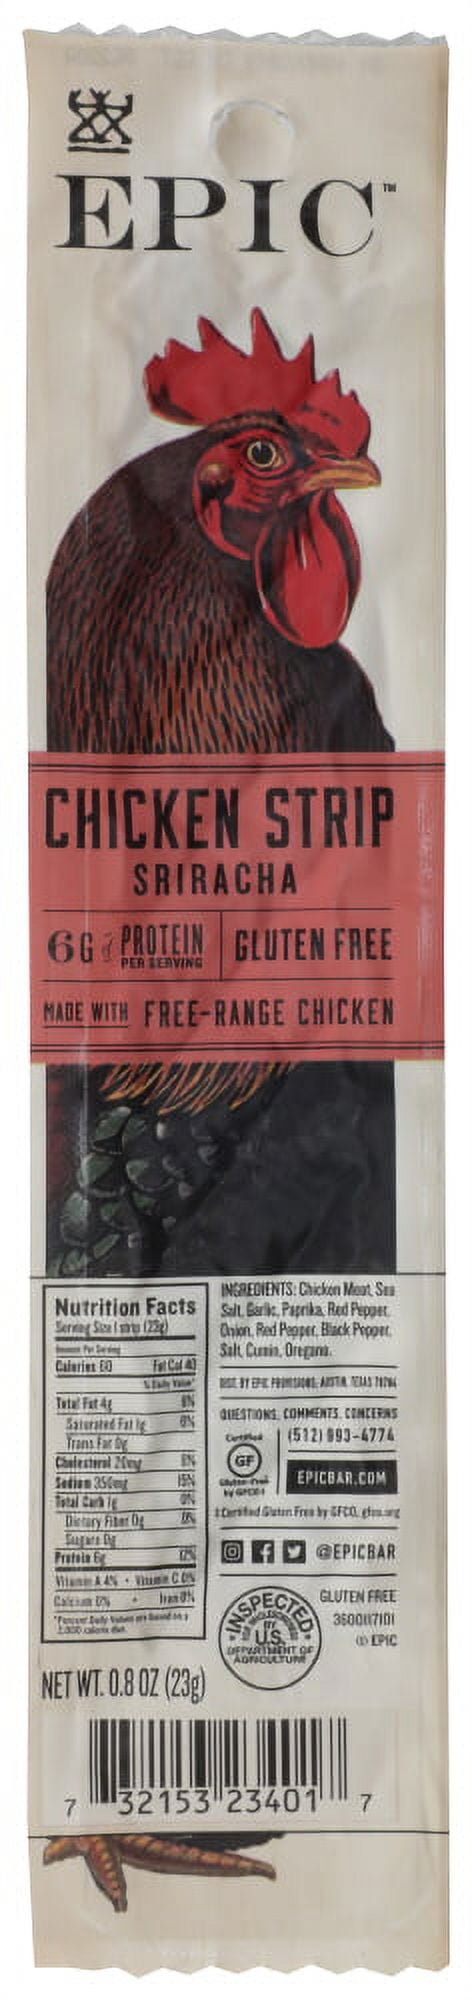 Epic Chicken Sriracha Snack Strip 0.8 Oz Pouch